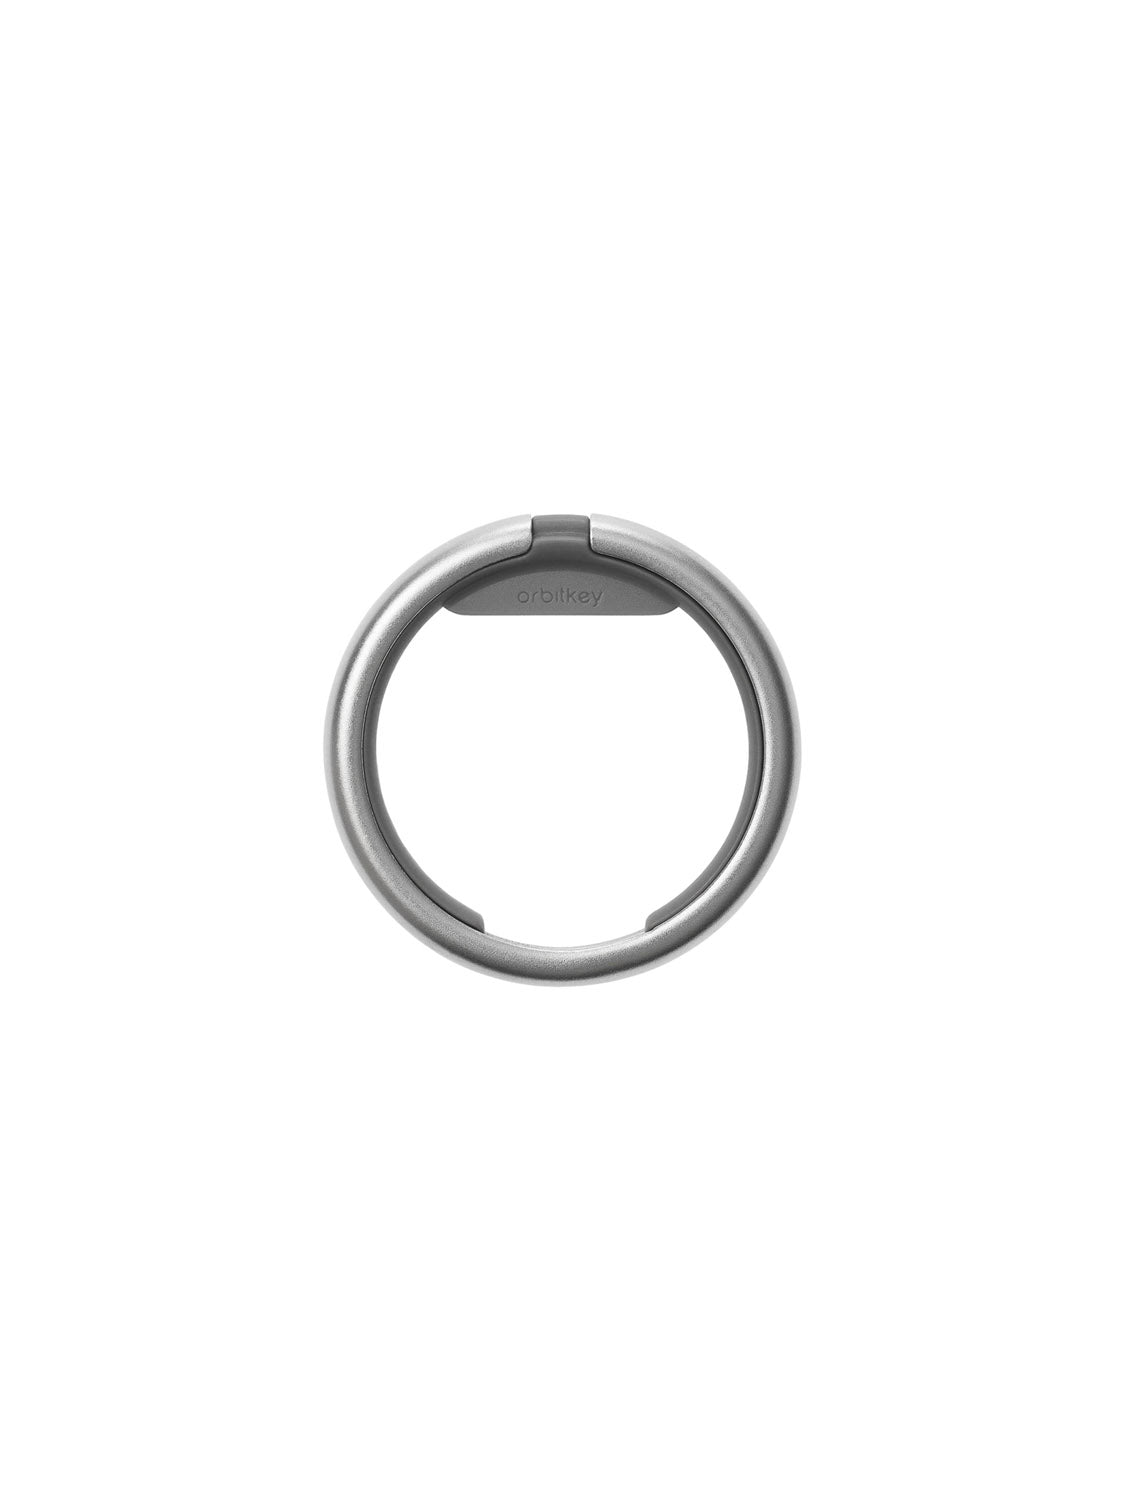 Orbitkey Key Ring